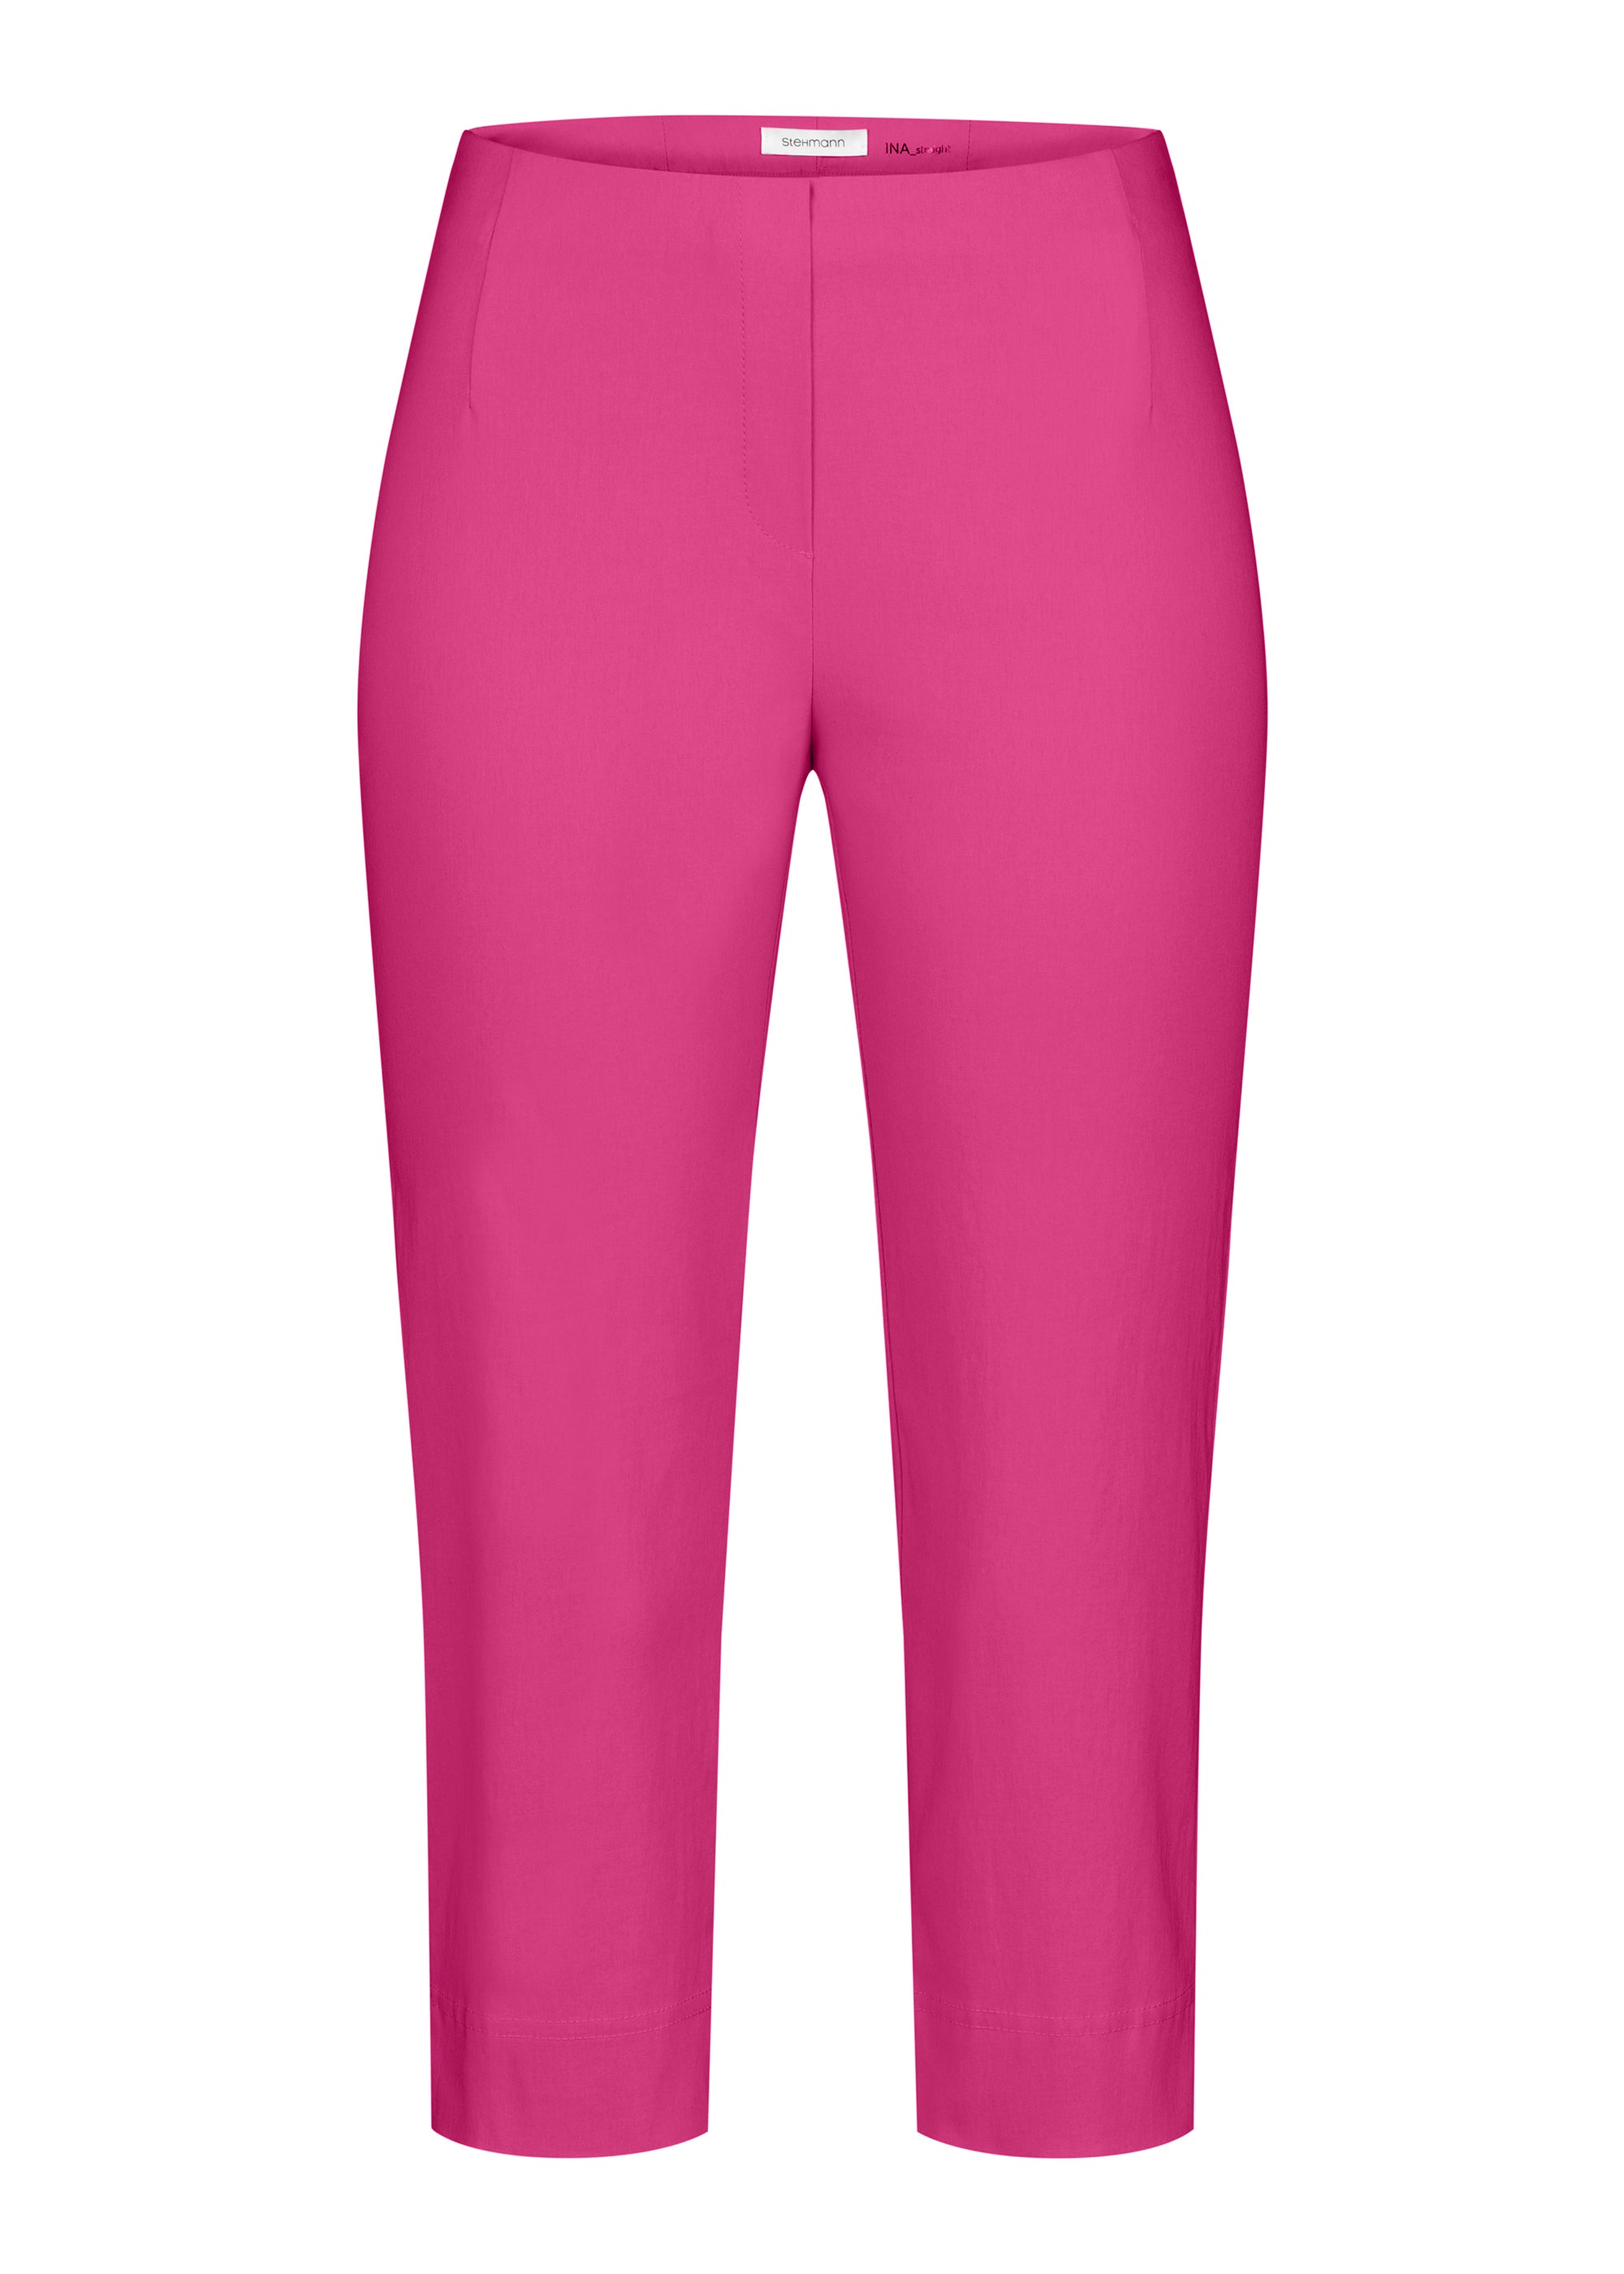 Stehmann Pink Capri Trouser